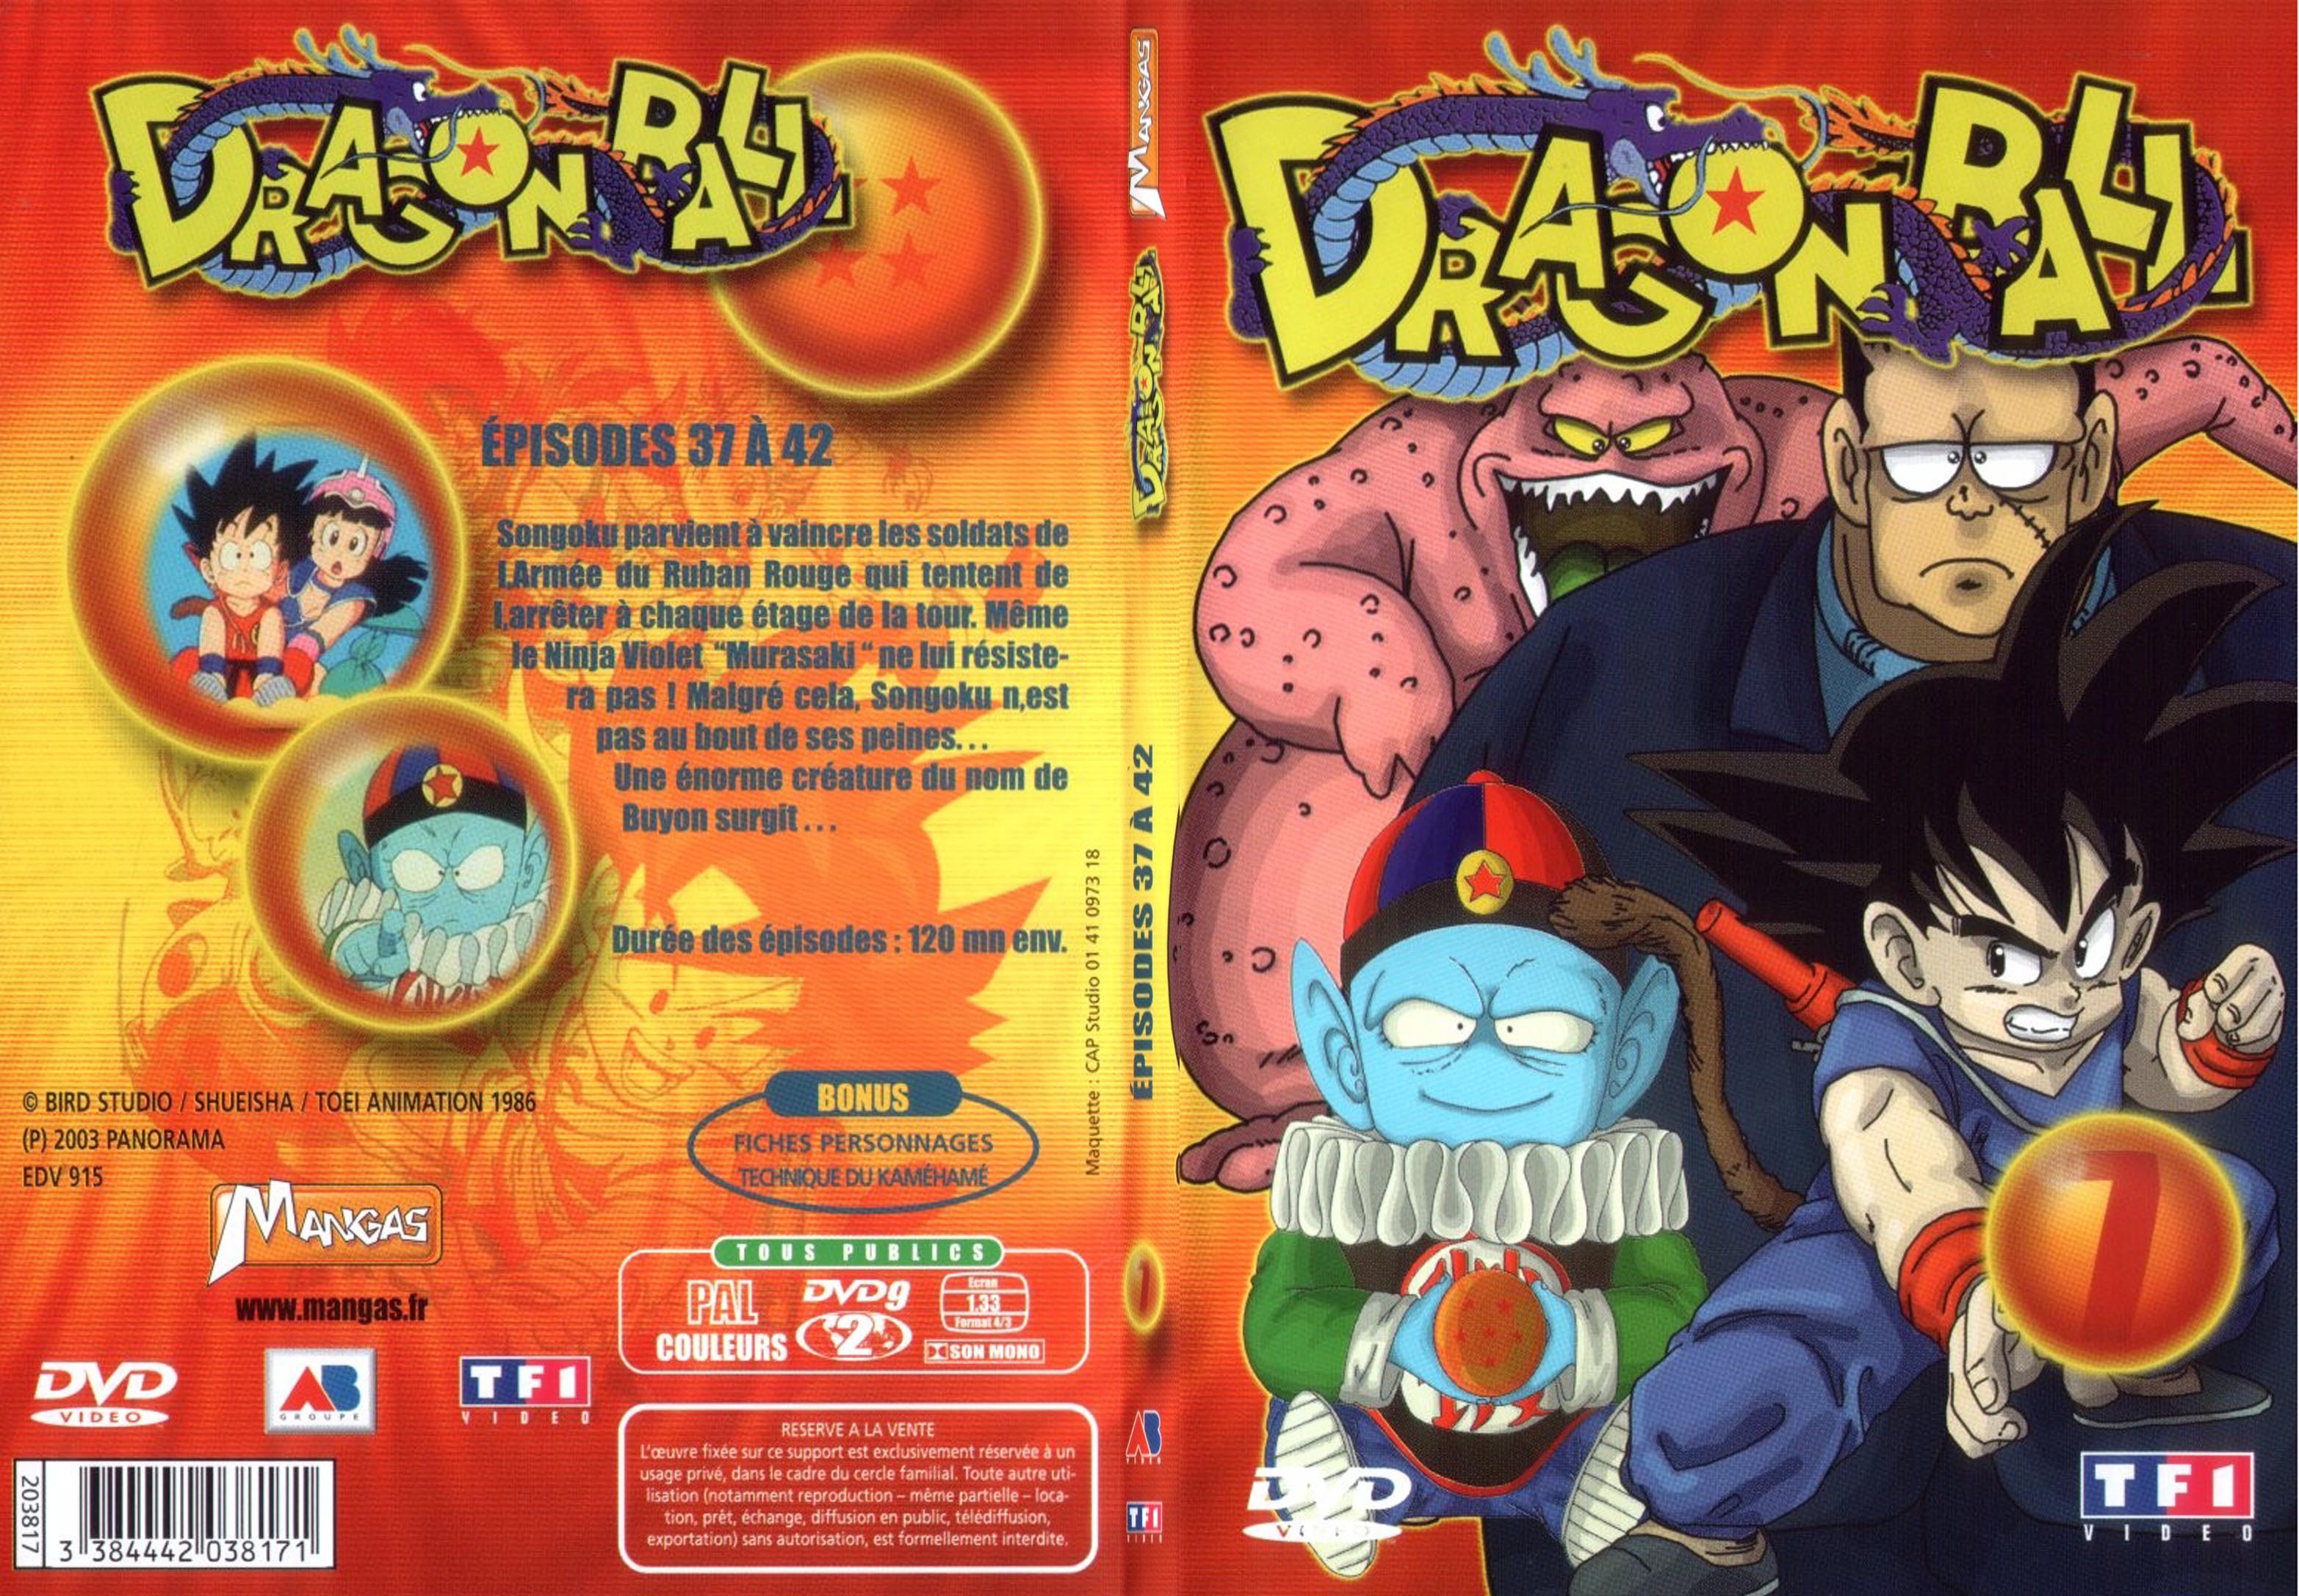 Jaquette DVD Dragon ball vol 7 - SLIM